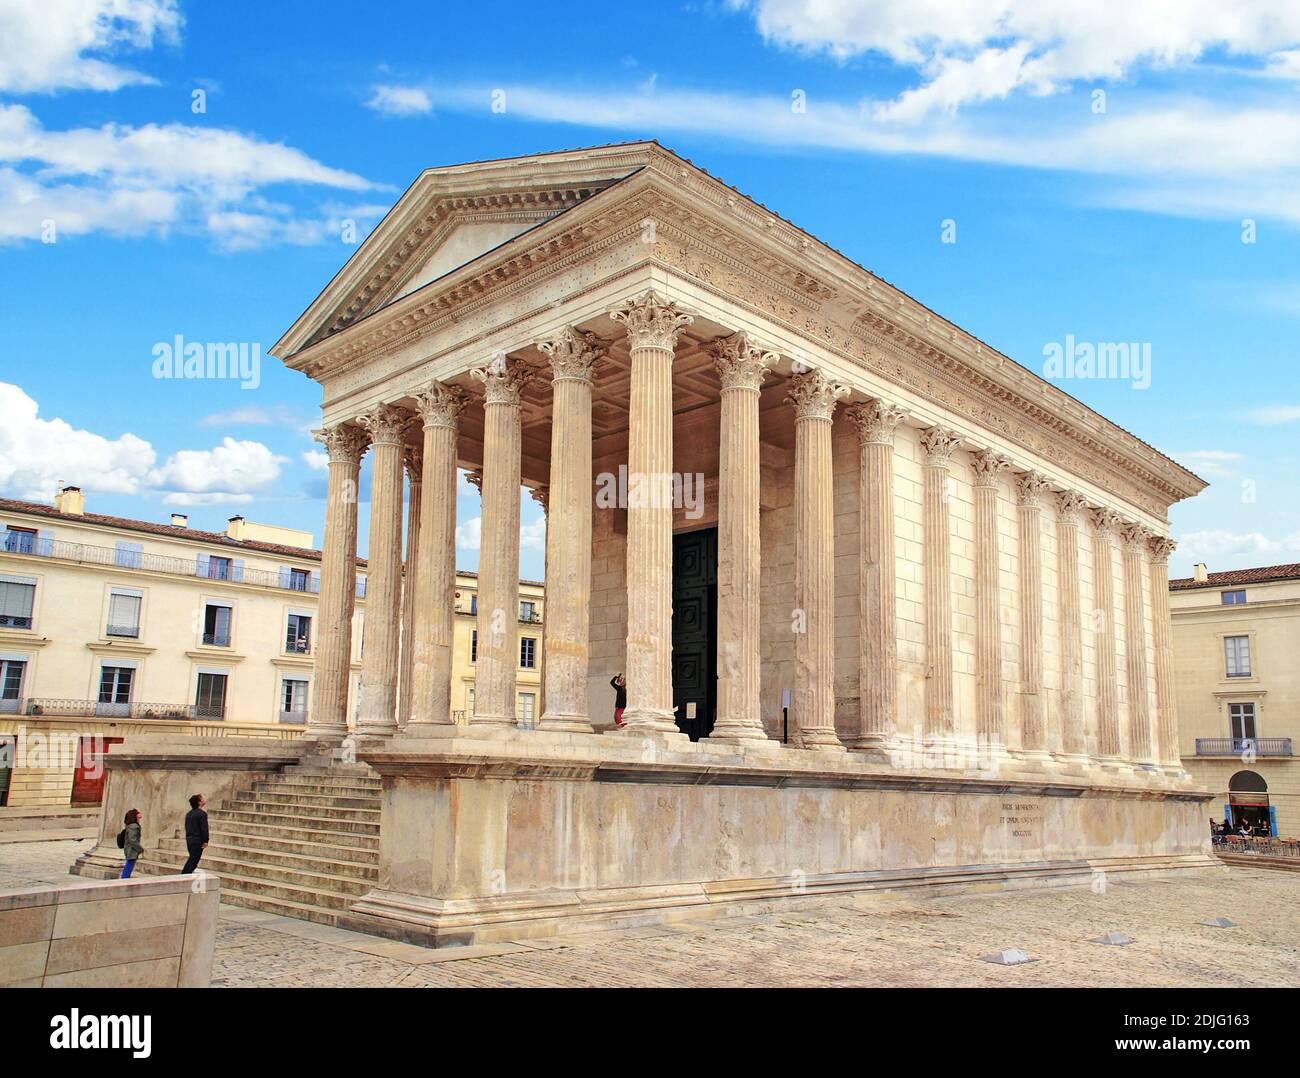 The famous square house, Roman vestige in Nîmes in Occitania, France. Stock Photo